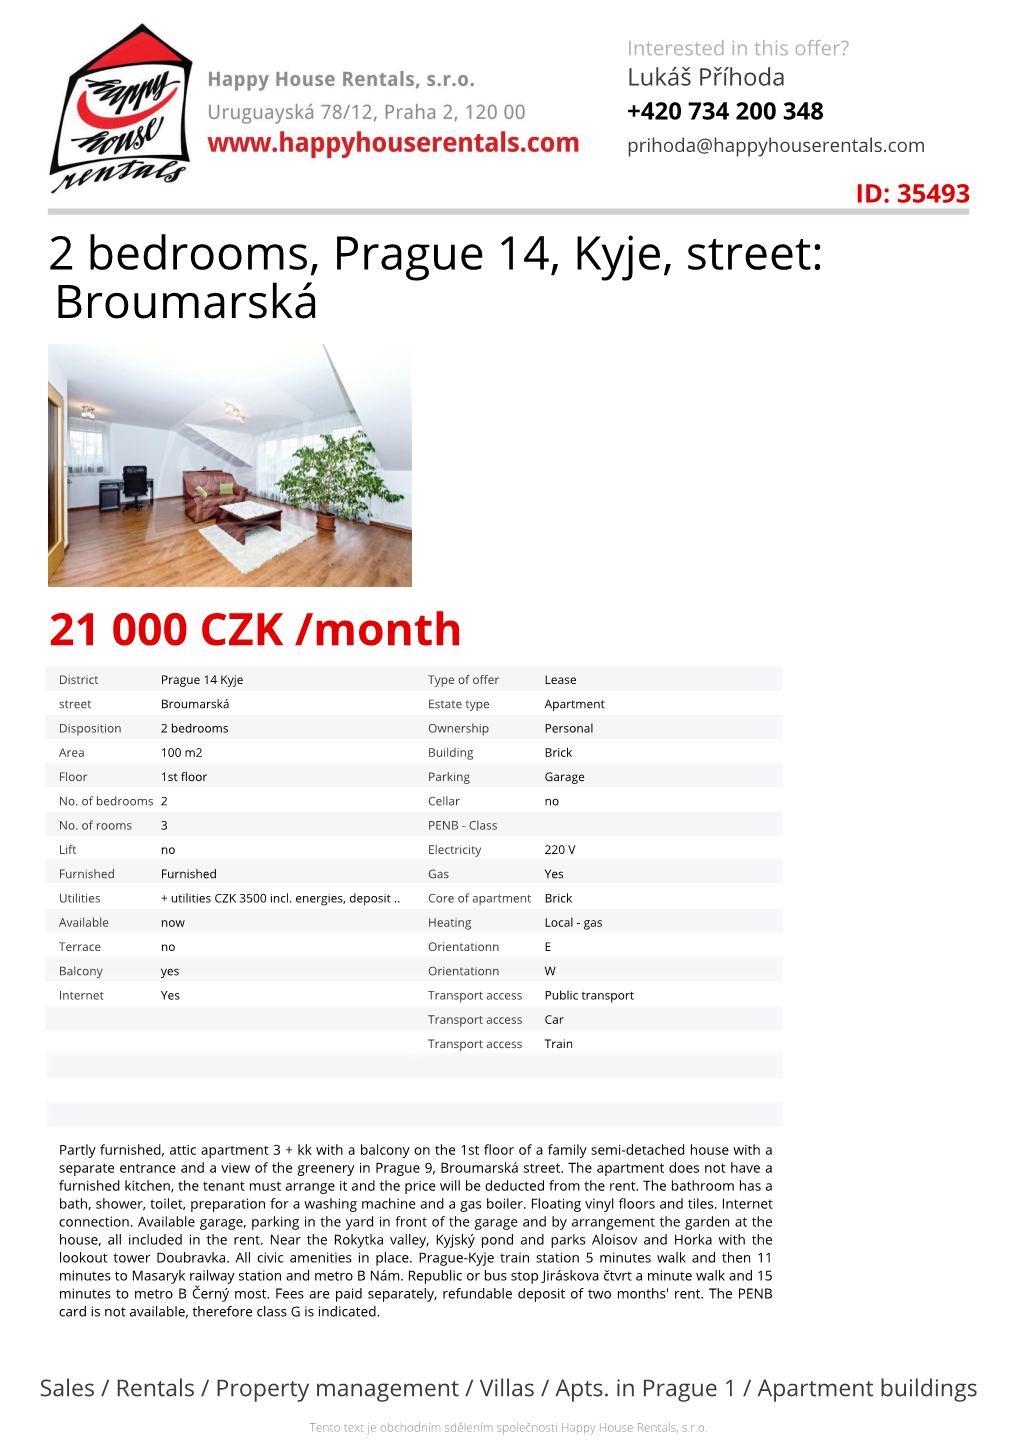 2 Bedrooms, Prague 14, Kyje, Street: Broumarská